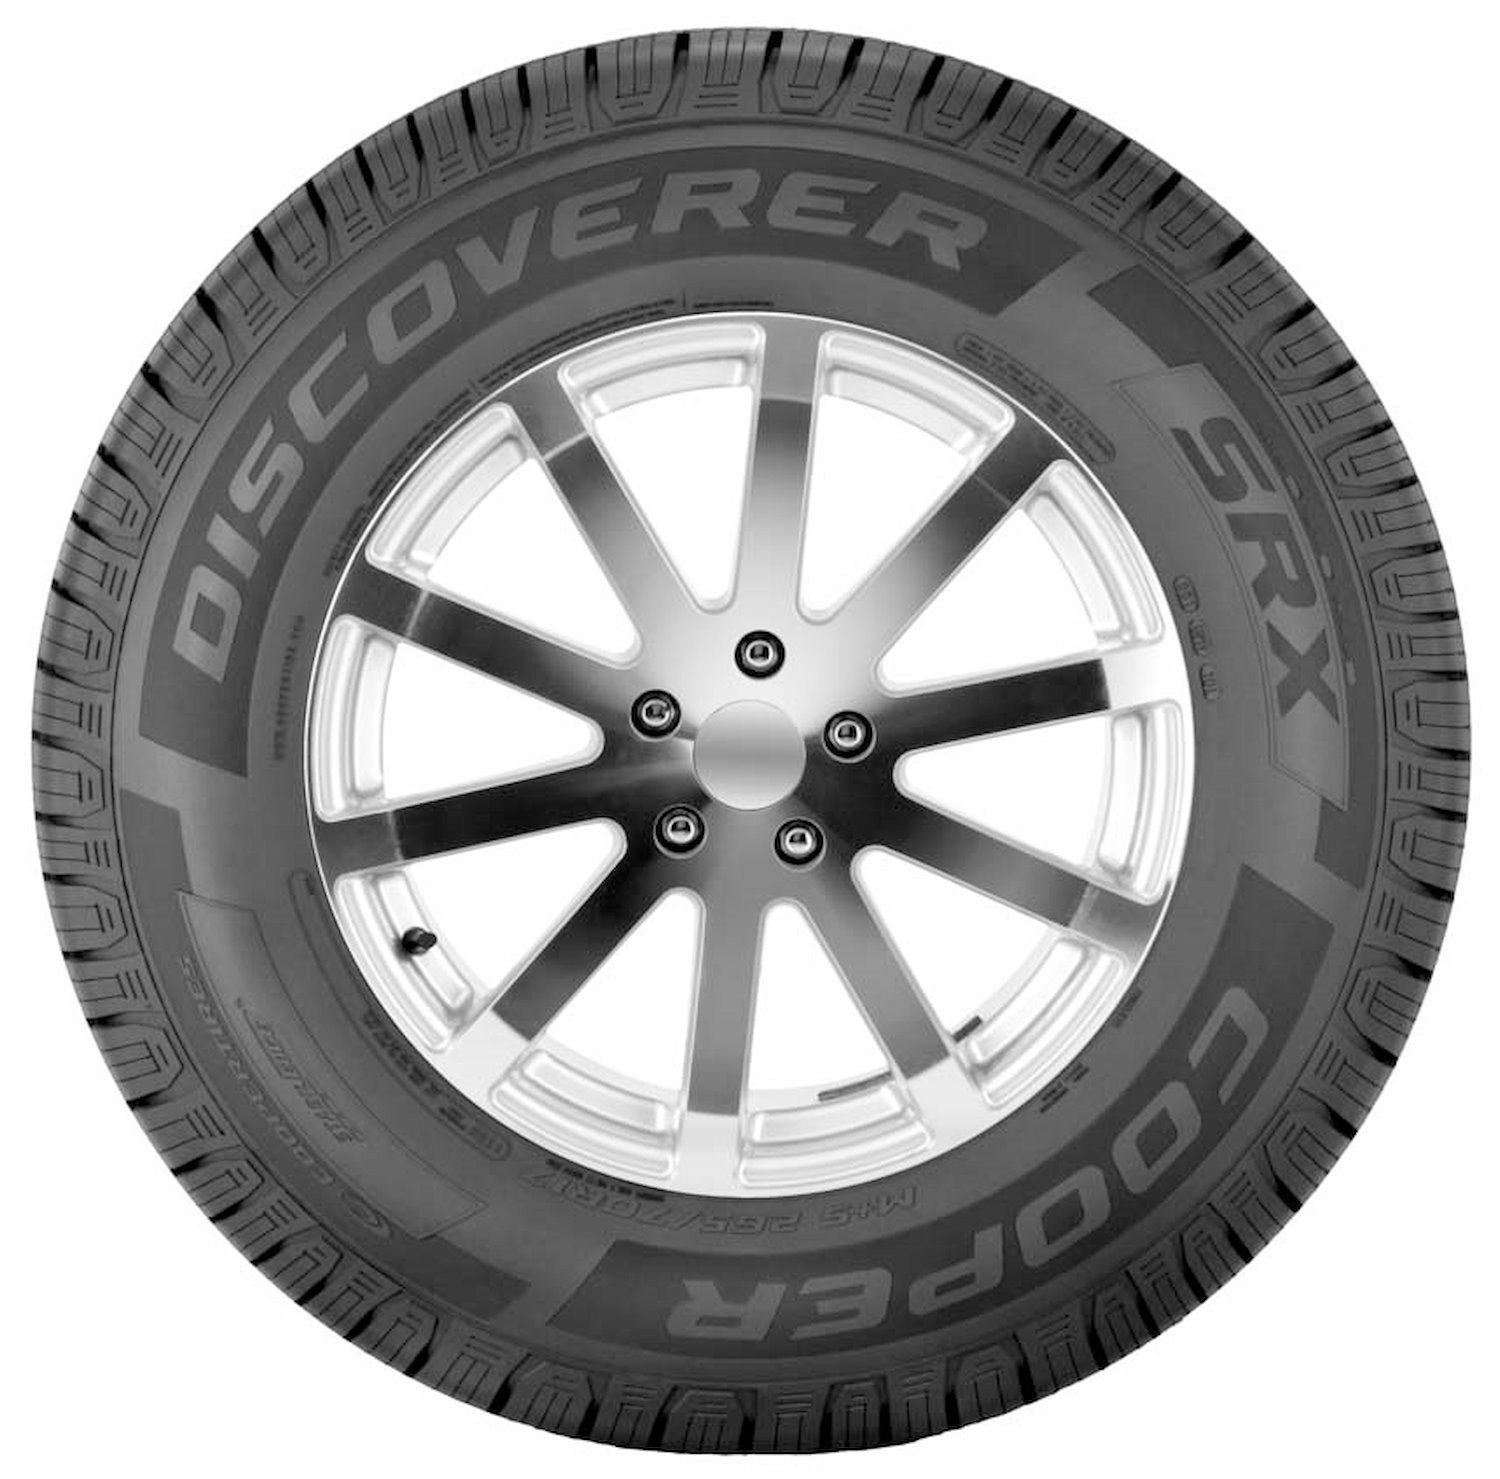 Discoverer SRX Commuter/Touring Tire, 255/70R18